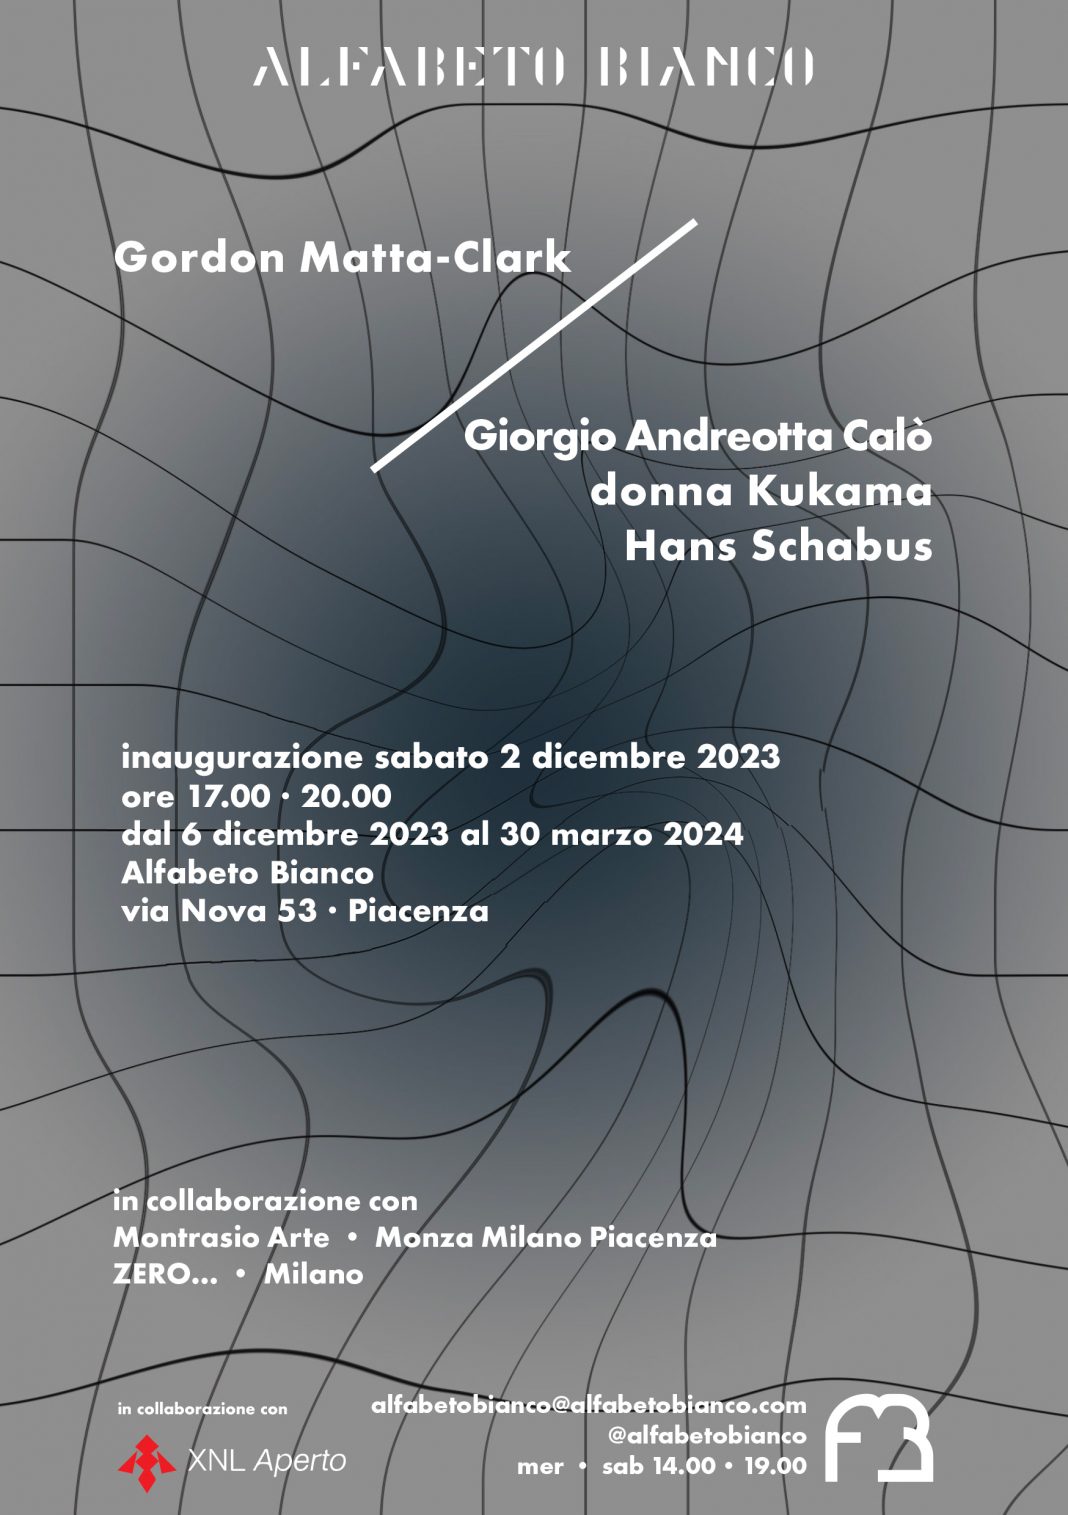 Gordon Matta-Clark / Giorgio Andreotta Calò / donna Kukama / Hans Schabushttps://www.exibart.com/repository/media/formidable/11/img/35b/AB_INVITO_GMC_HS_DK_GAC-1068x1515.jpg